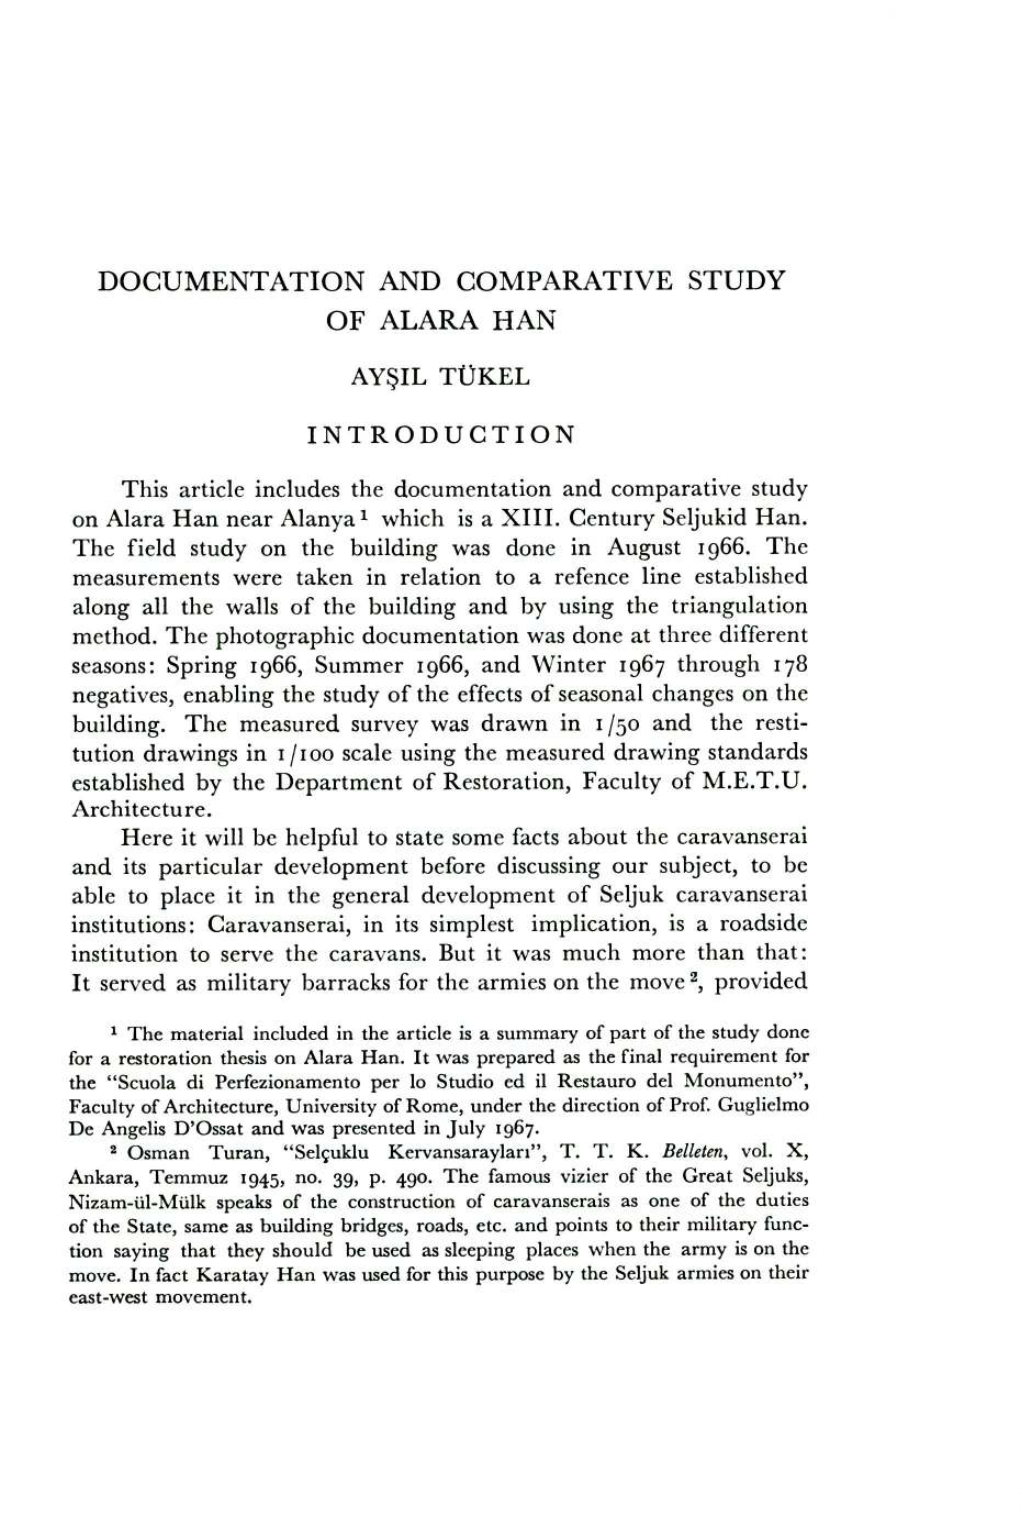 Documentation and Comparative Study of Alara Han